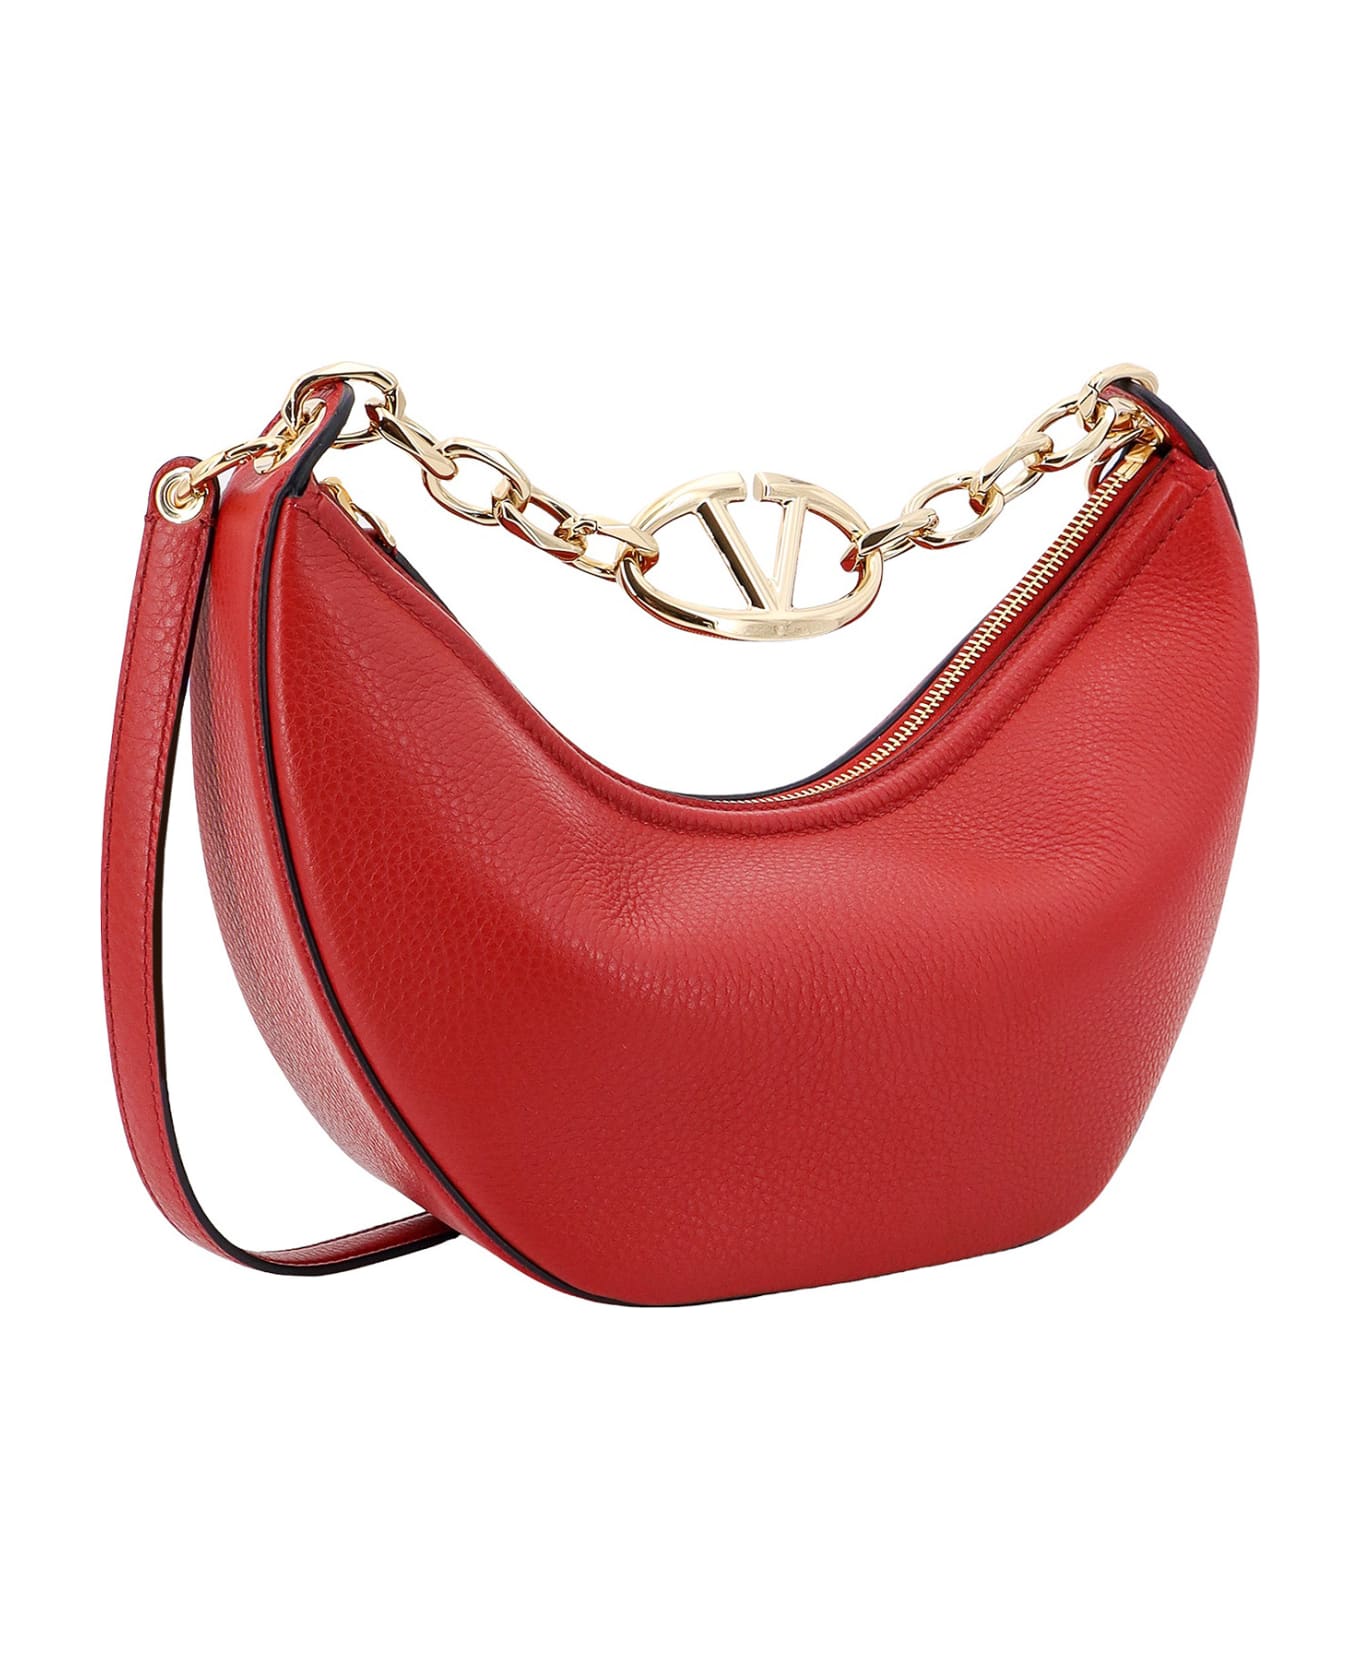 Valentino Garavani Vlogo Moon Bag Handbag - Red